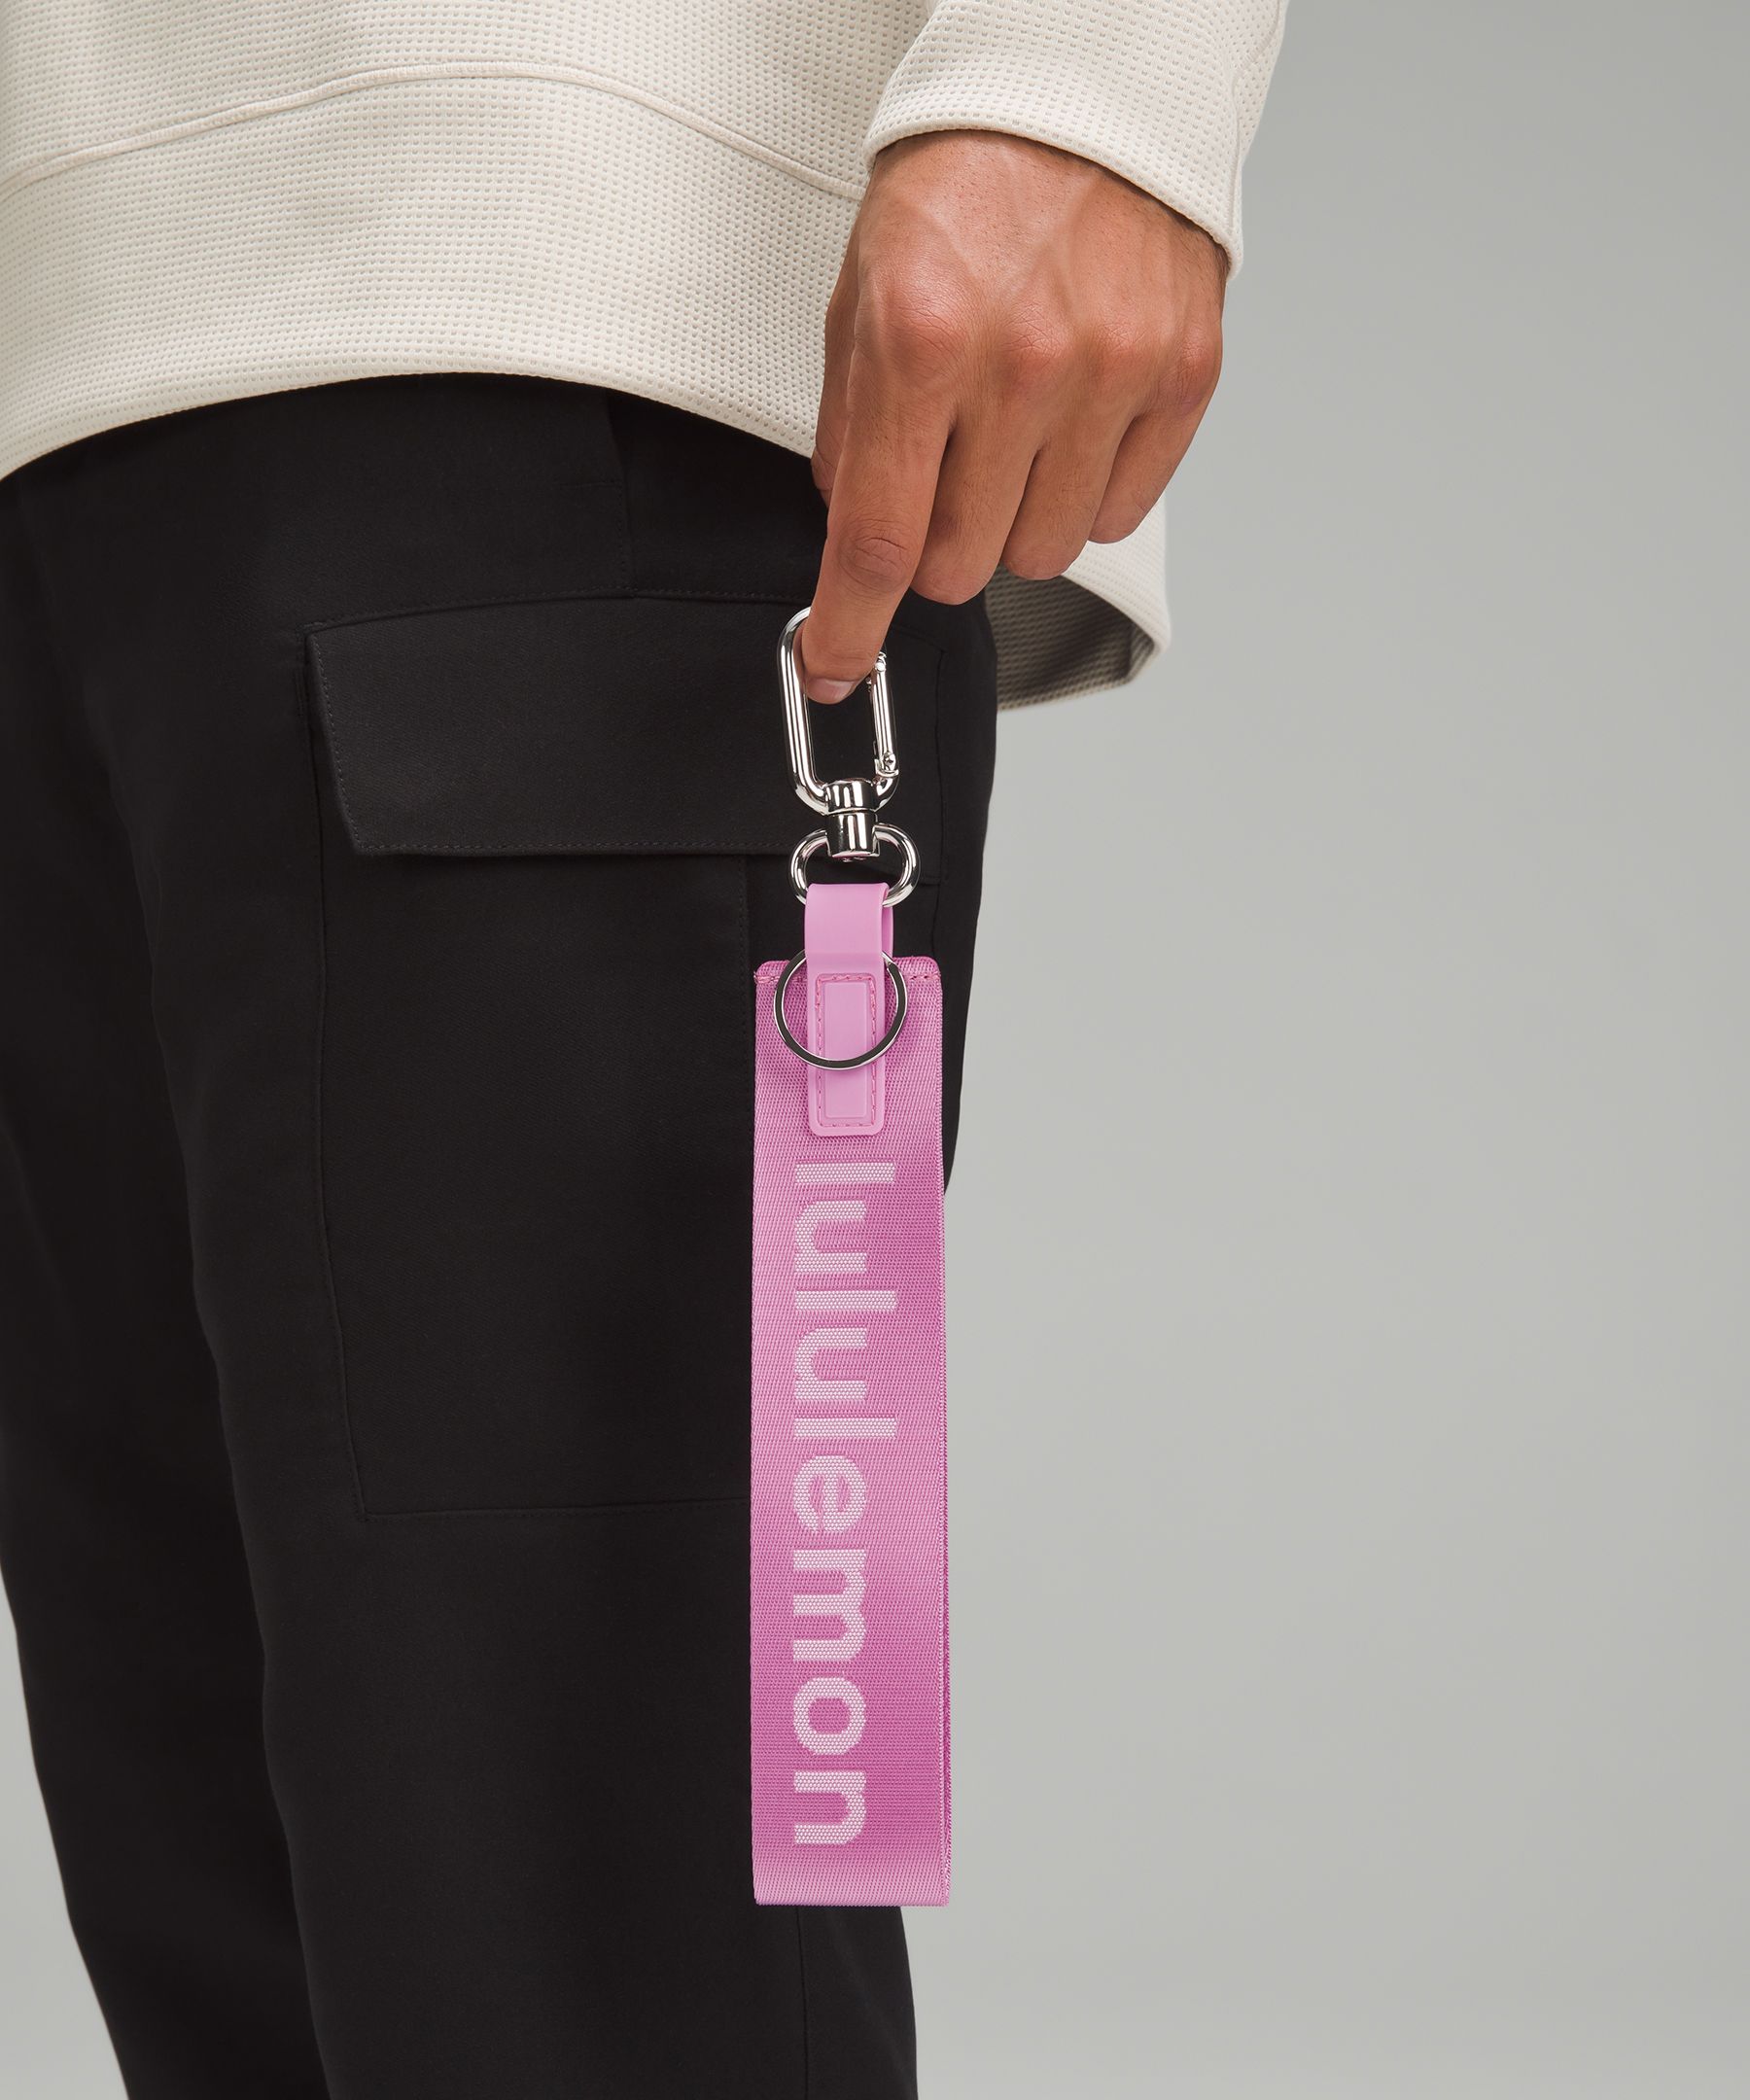 Lululemon handmade key chain luggage tag purse tag A35